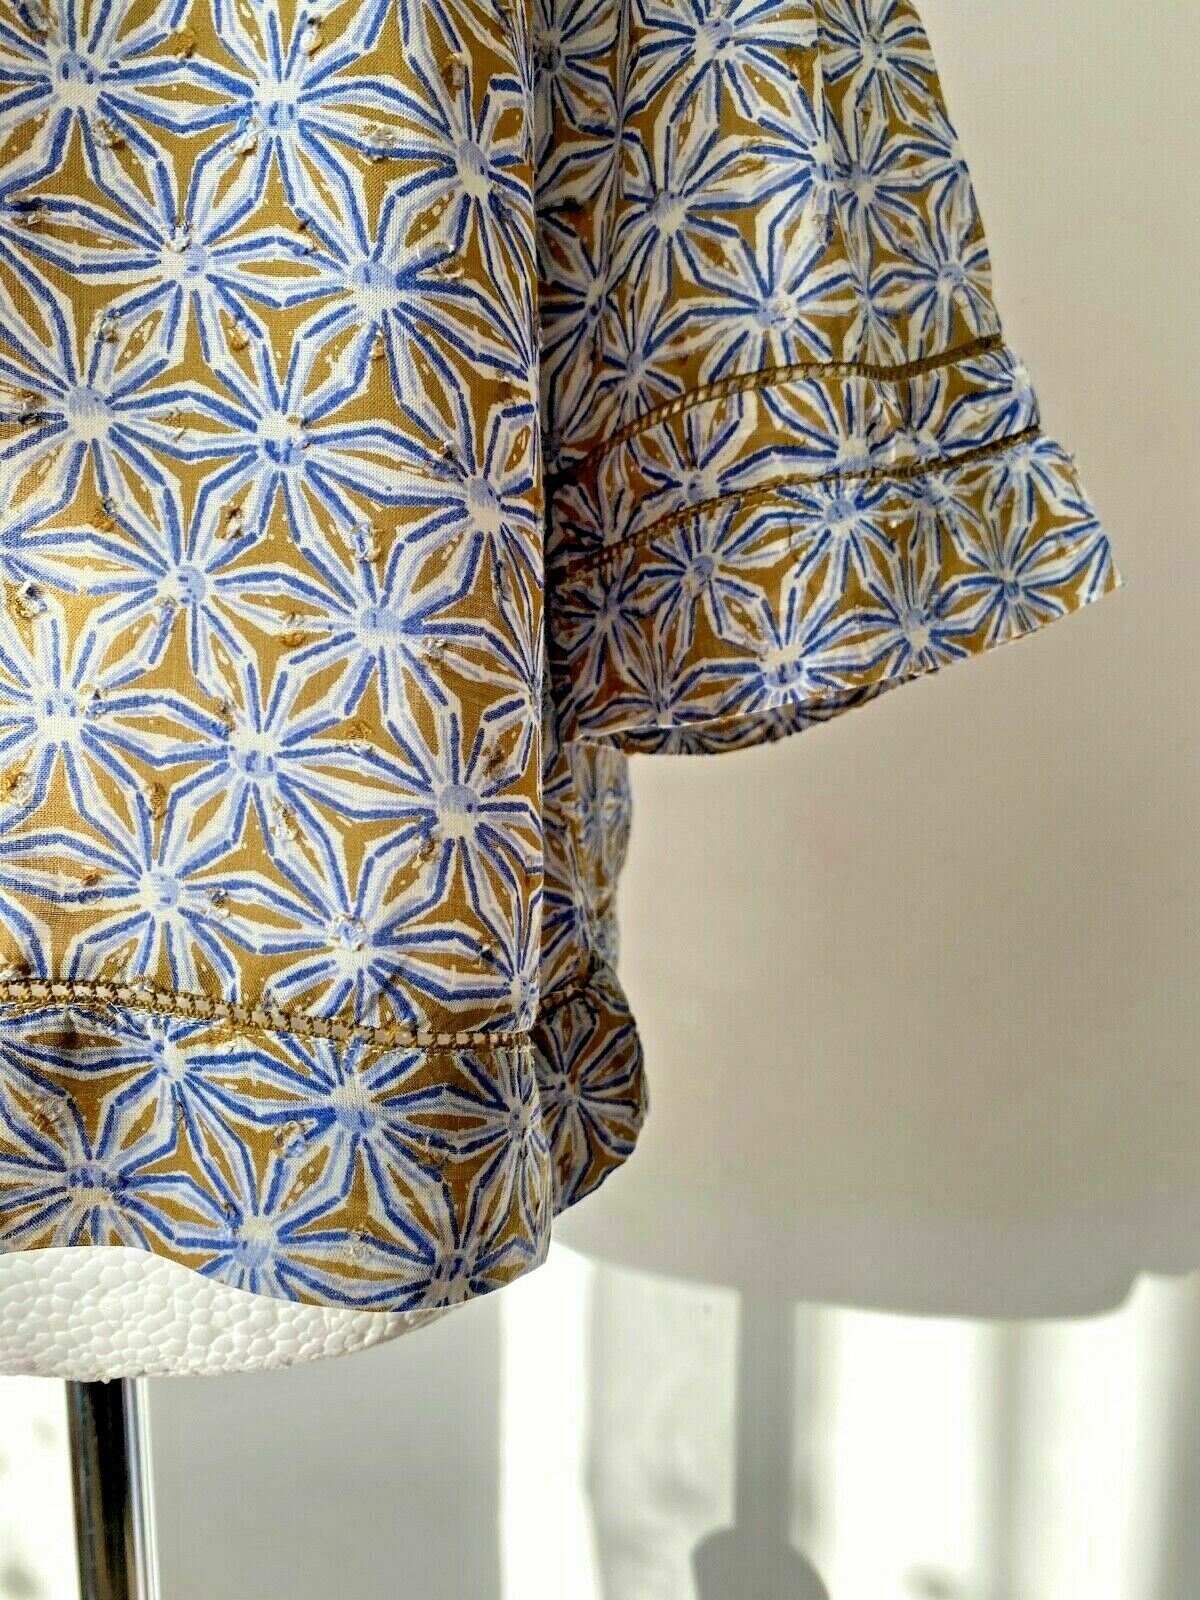 Mistral Ochre Floral Print Top 3/4 Sleeve Lightweight Blouse 10 12 RRP £39